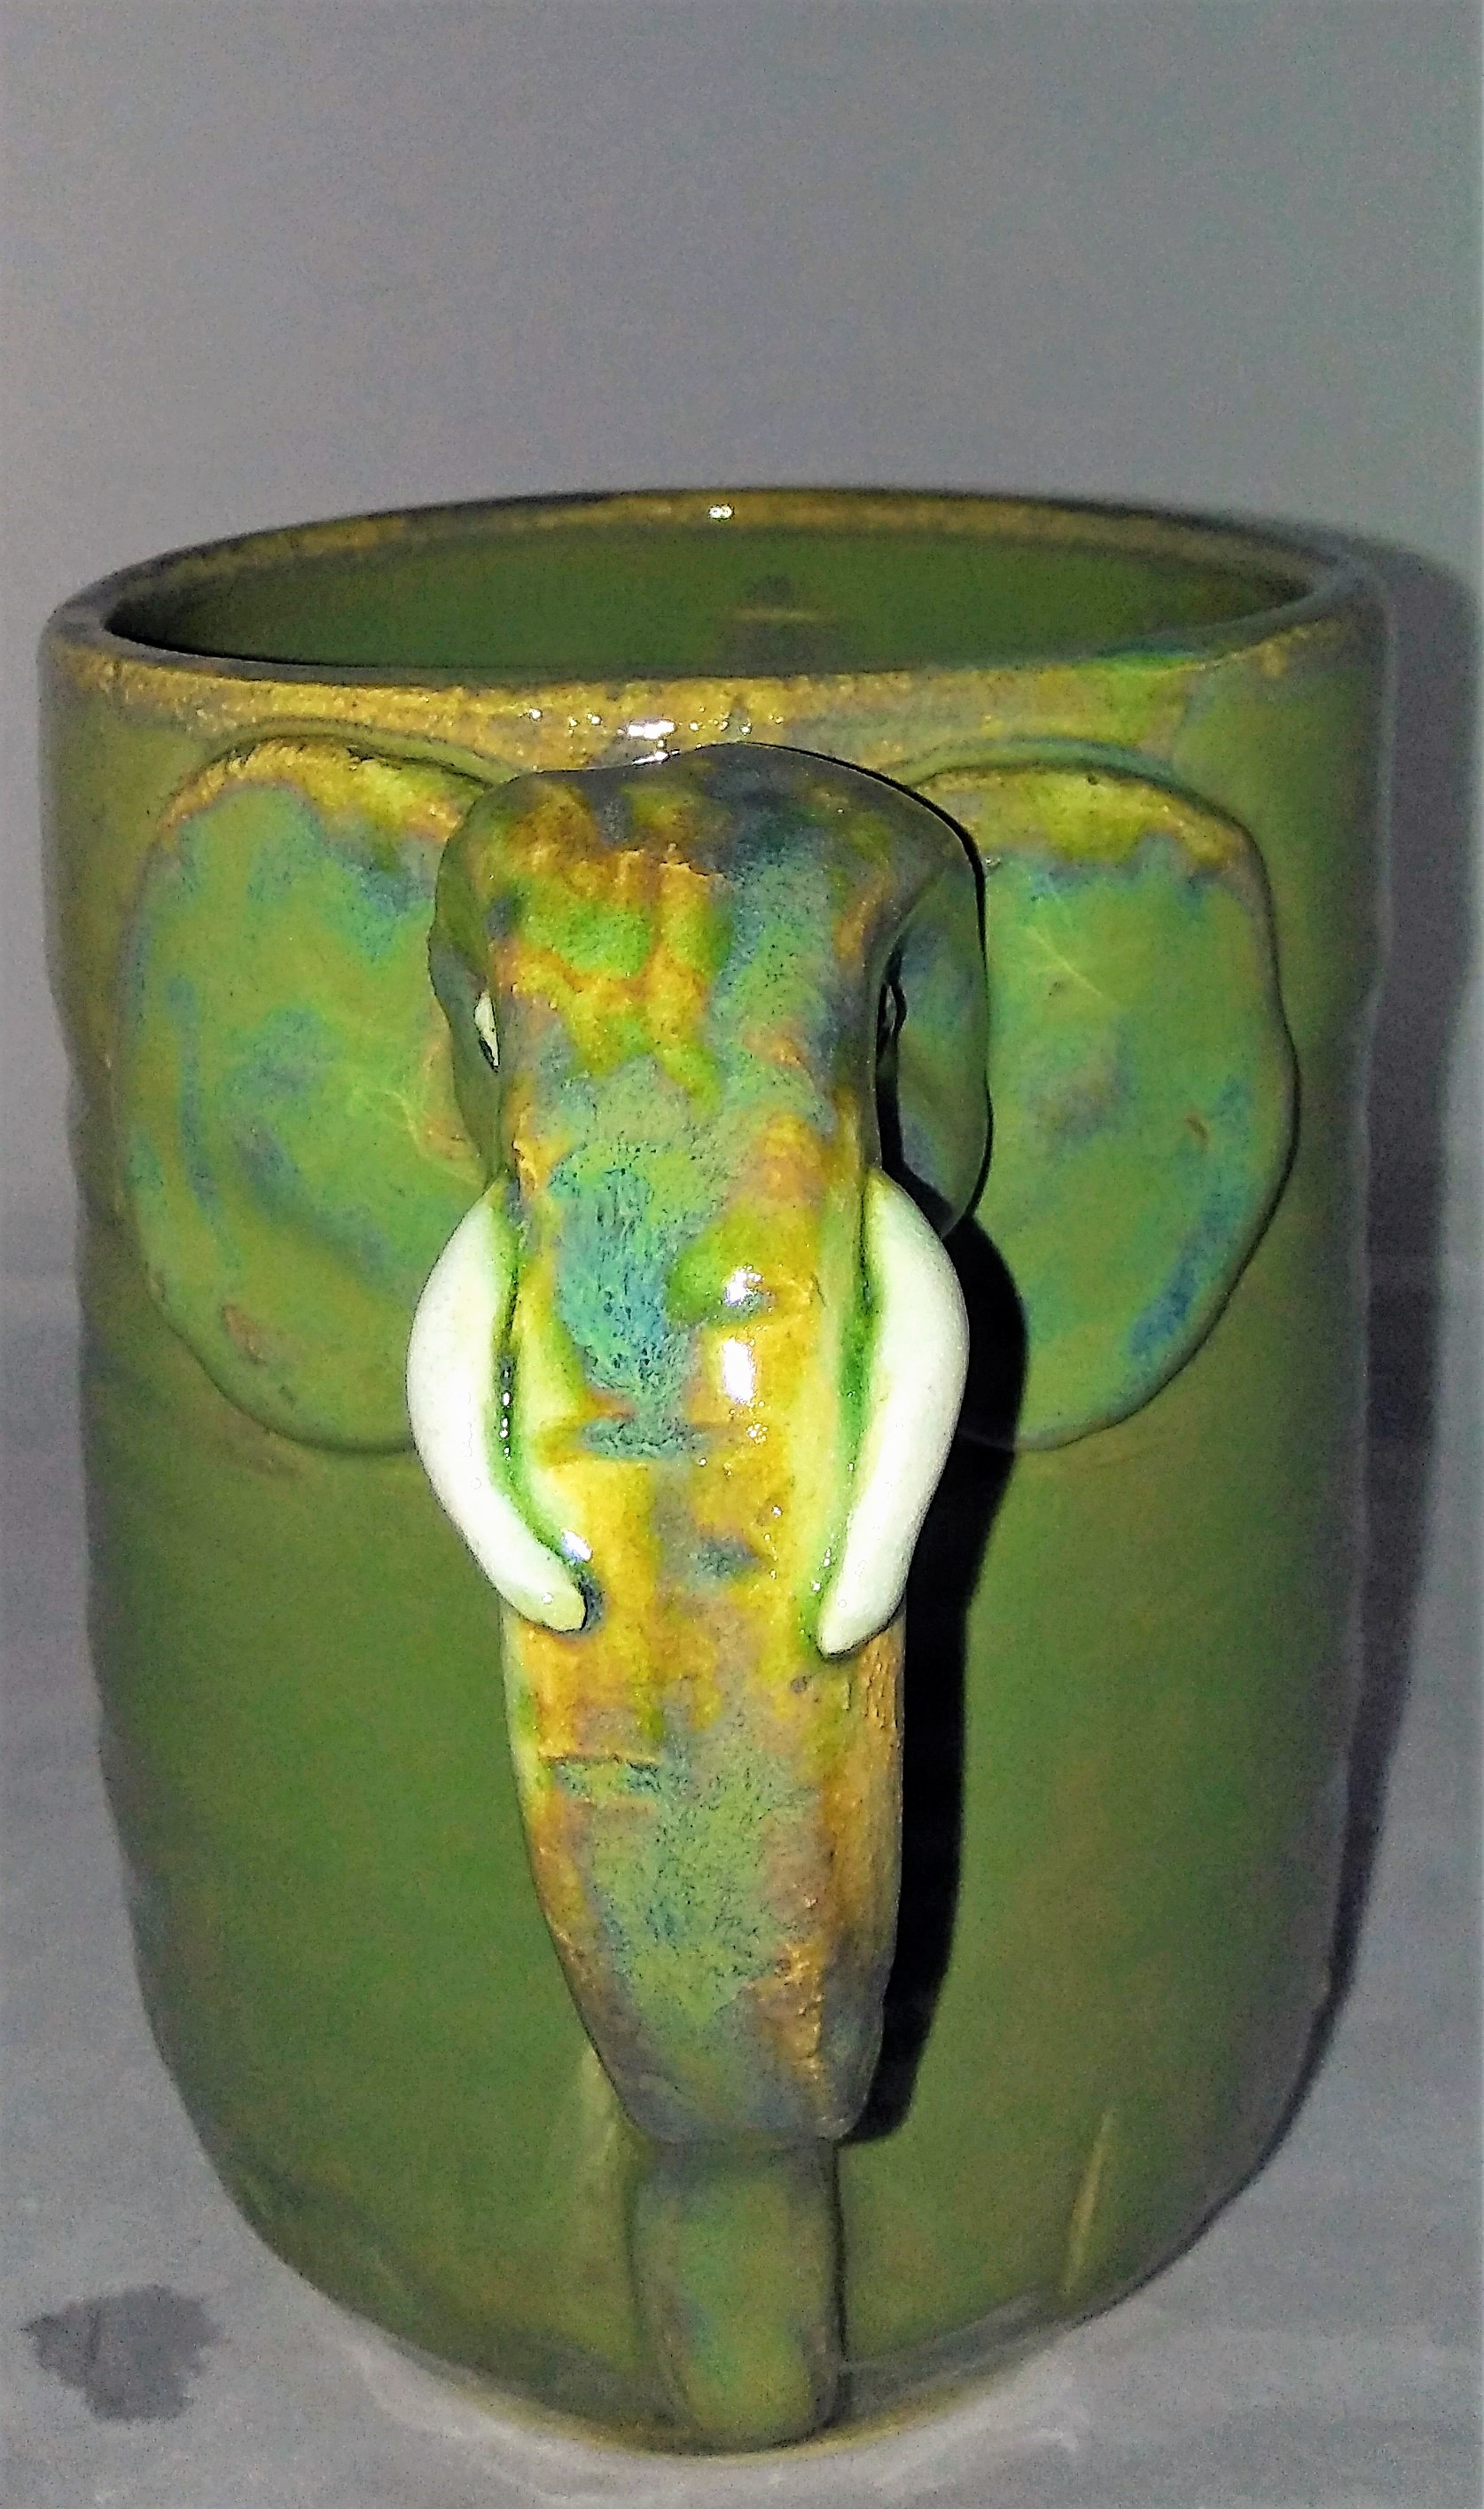 elephant mug